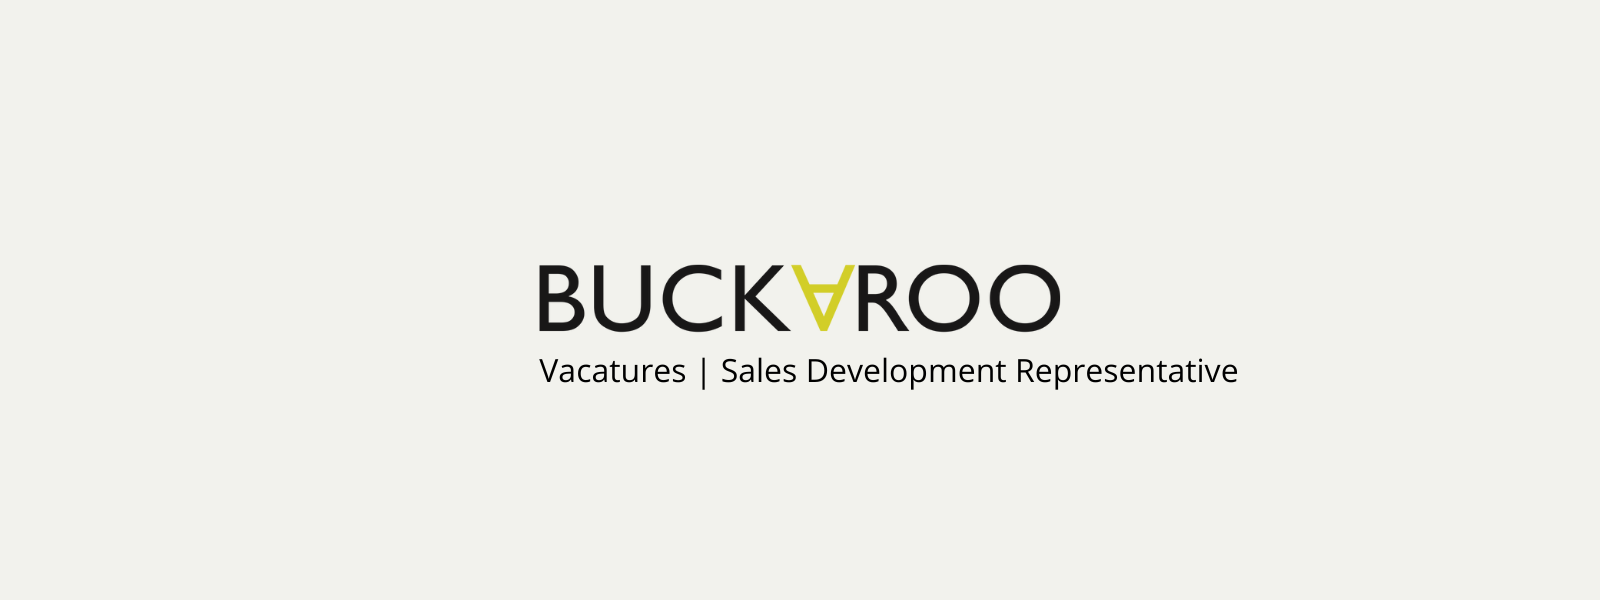 Sales Development Representative